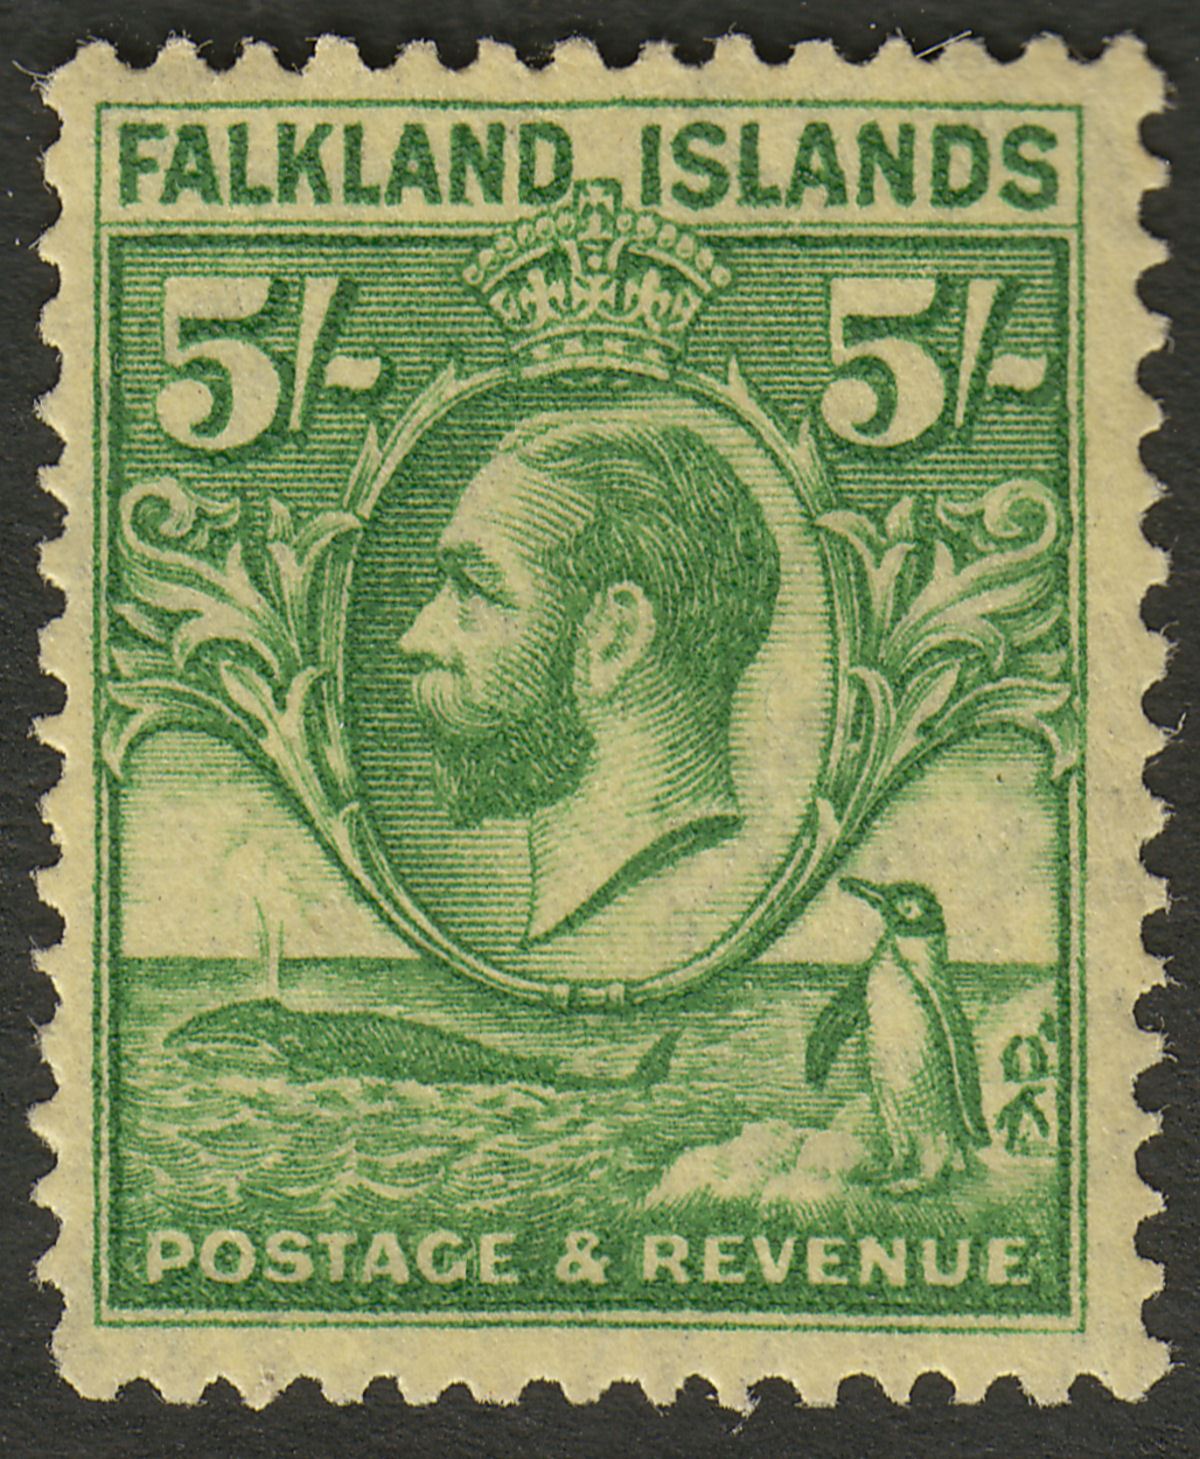 Falkland Islands 1929 KGV Whale + Penguins 5sh Green on Yel Mint SG124 cat £100